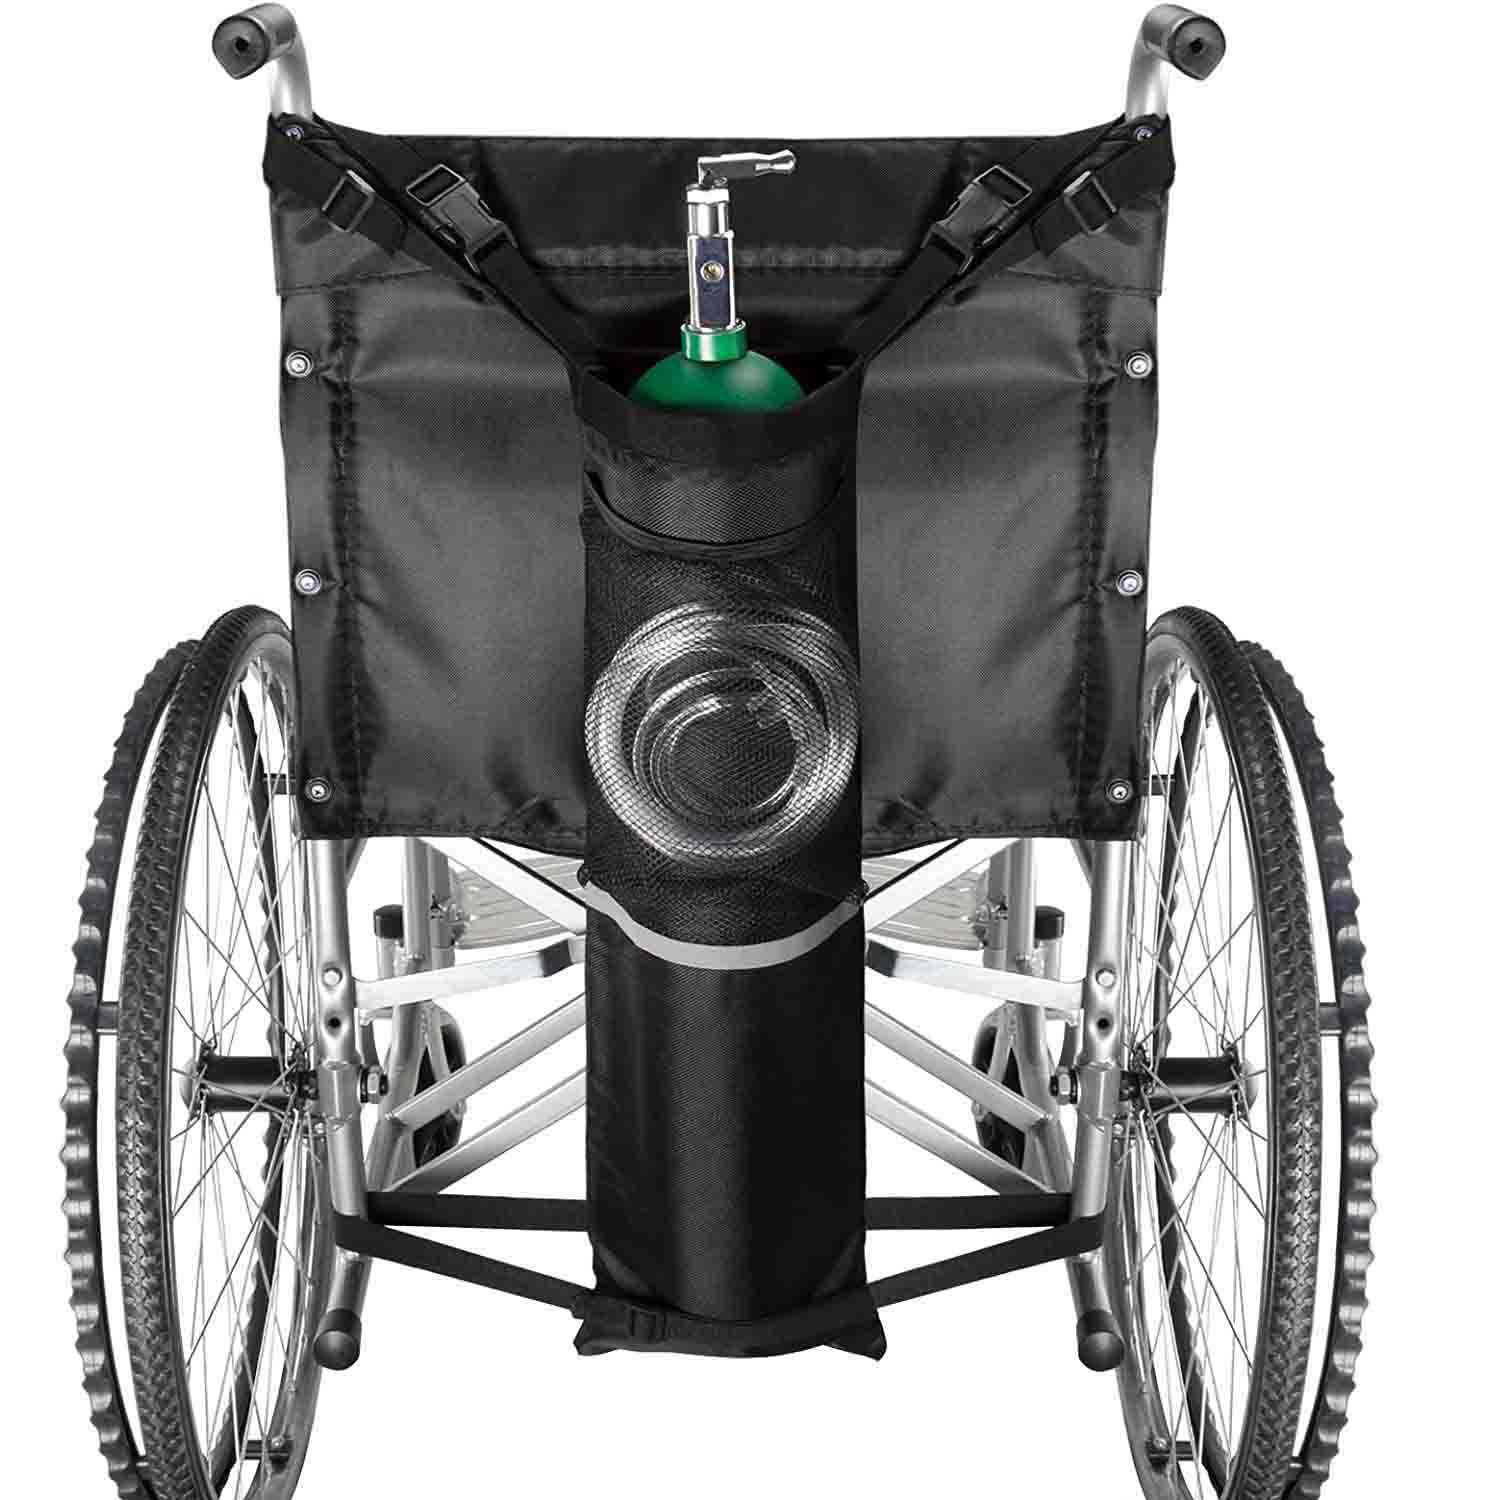 Soporte de tanque de oxígeno a prueba de agua para bolsa de transporte de cilindro de silla de ruedas conveniente bolsa organizadora de soporte de cilindro de oxígeno médico